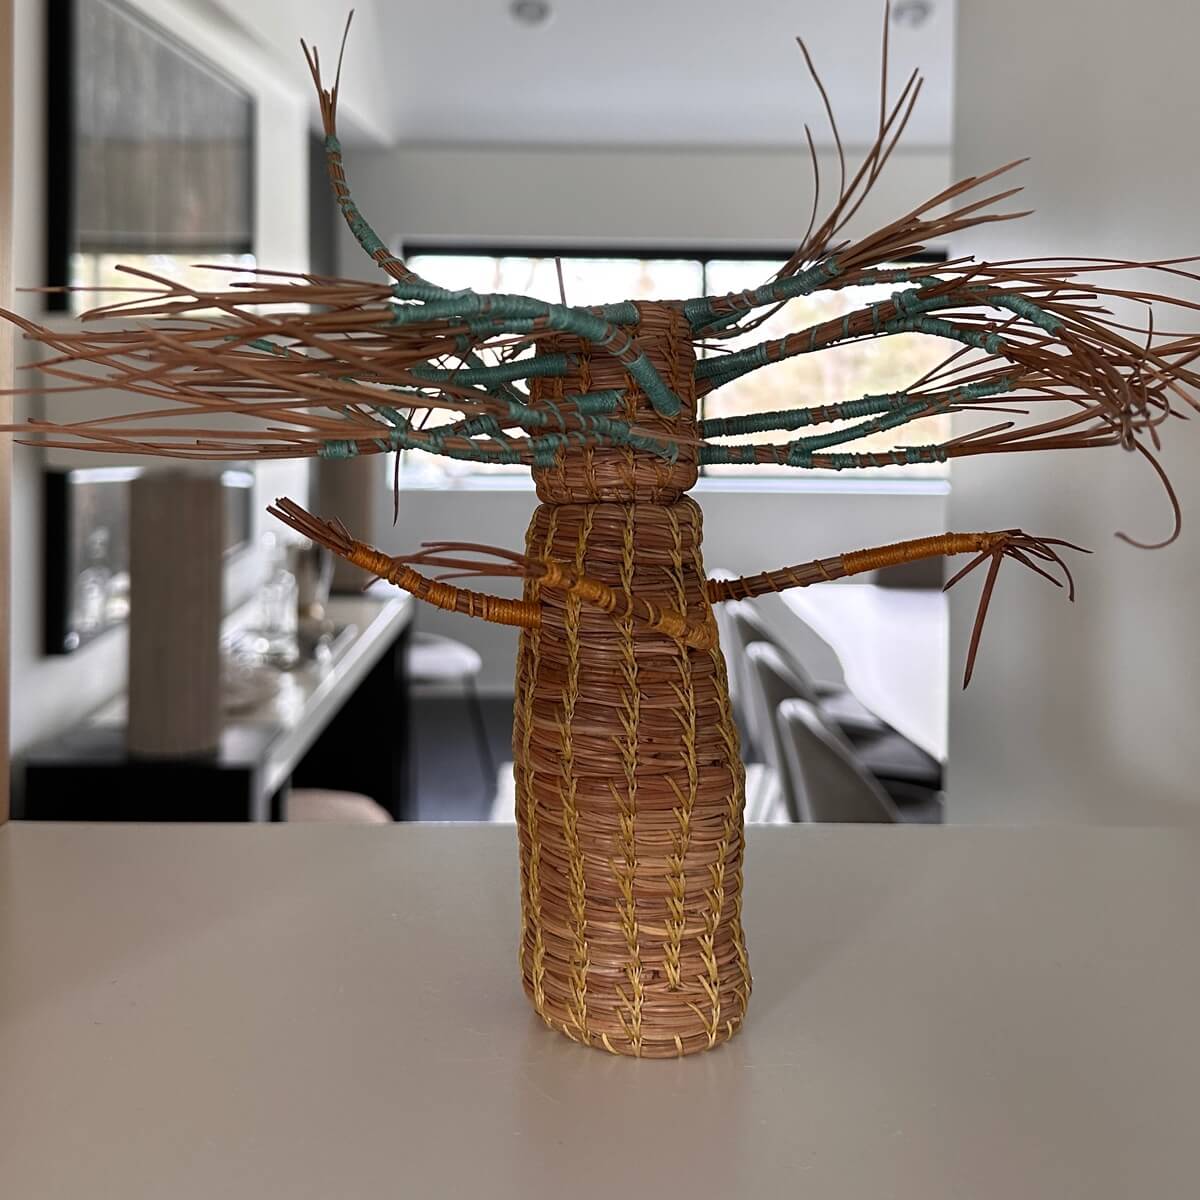 Student sculpture titled “Twisting Tree” 